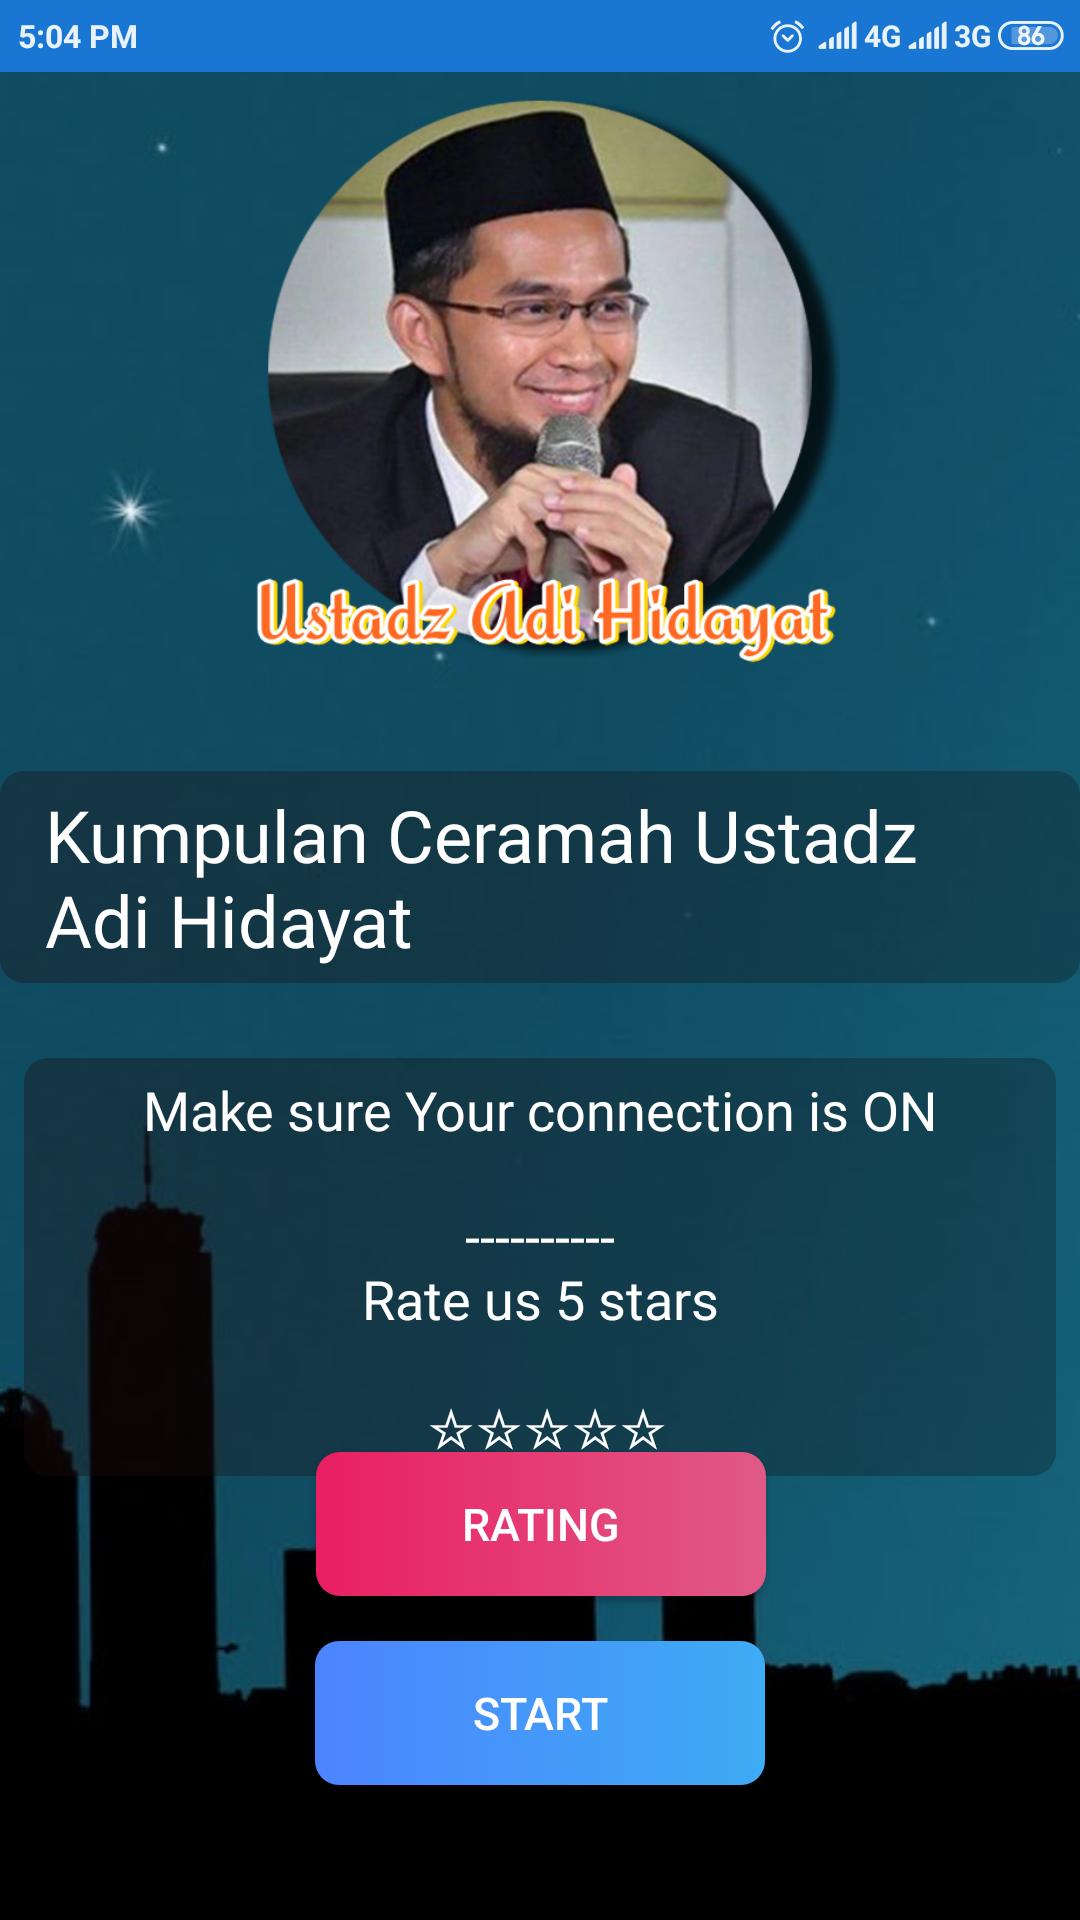 Kumpulan Ceramah Ustadz Adi Hidayat For Android Apk Download